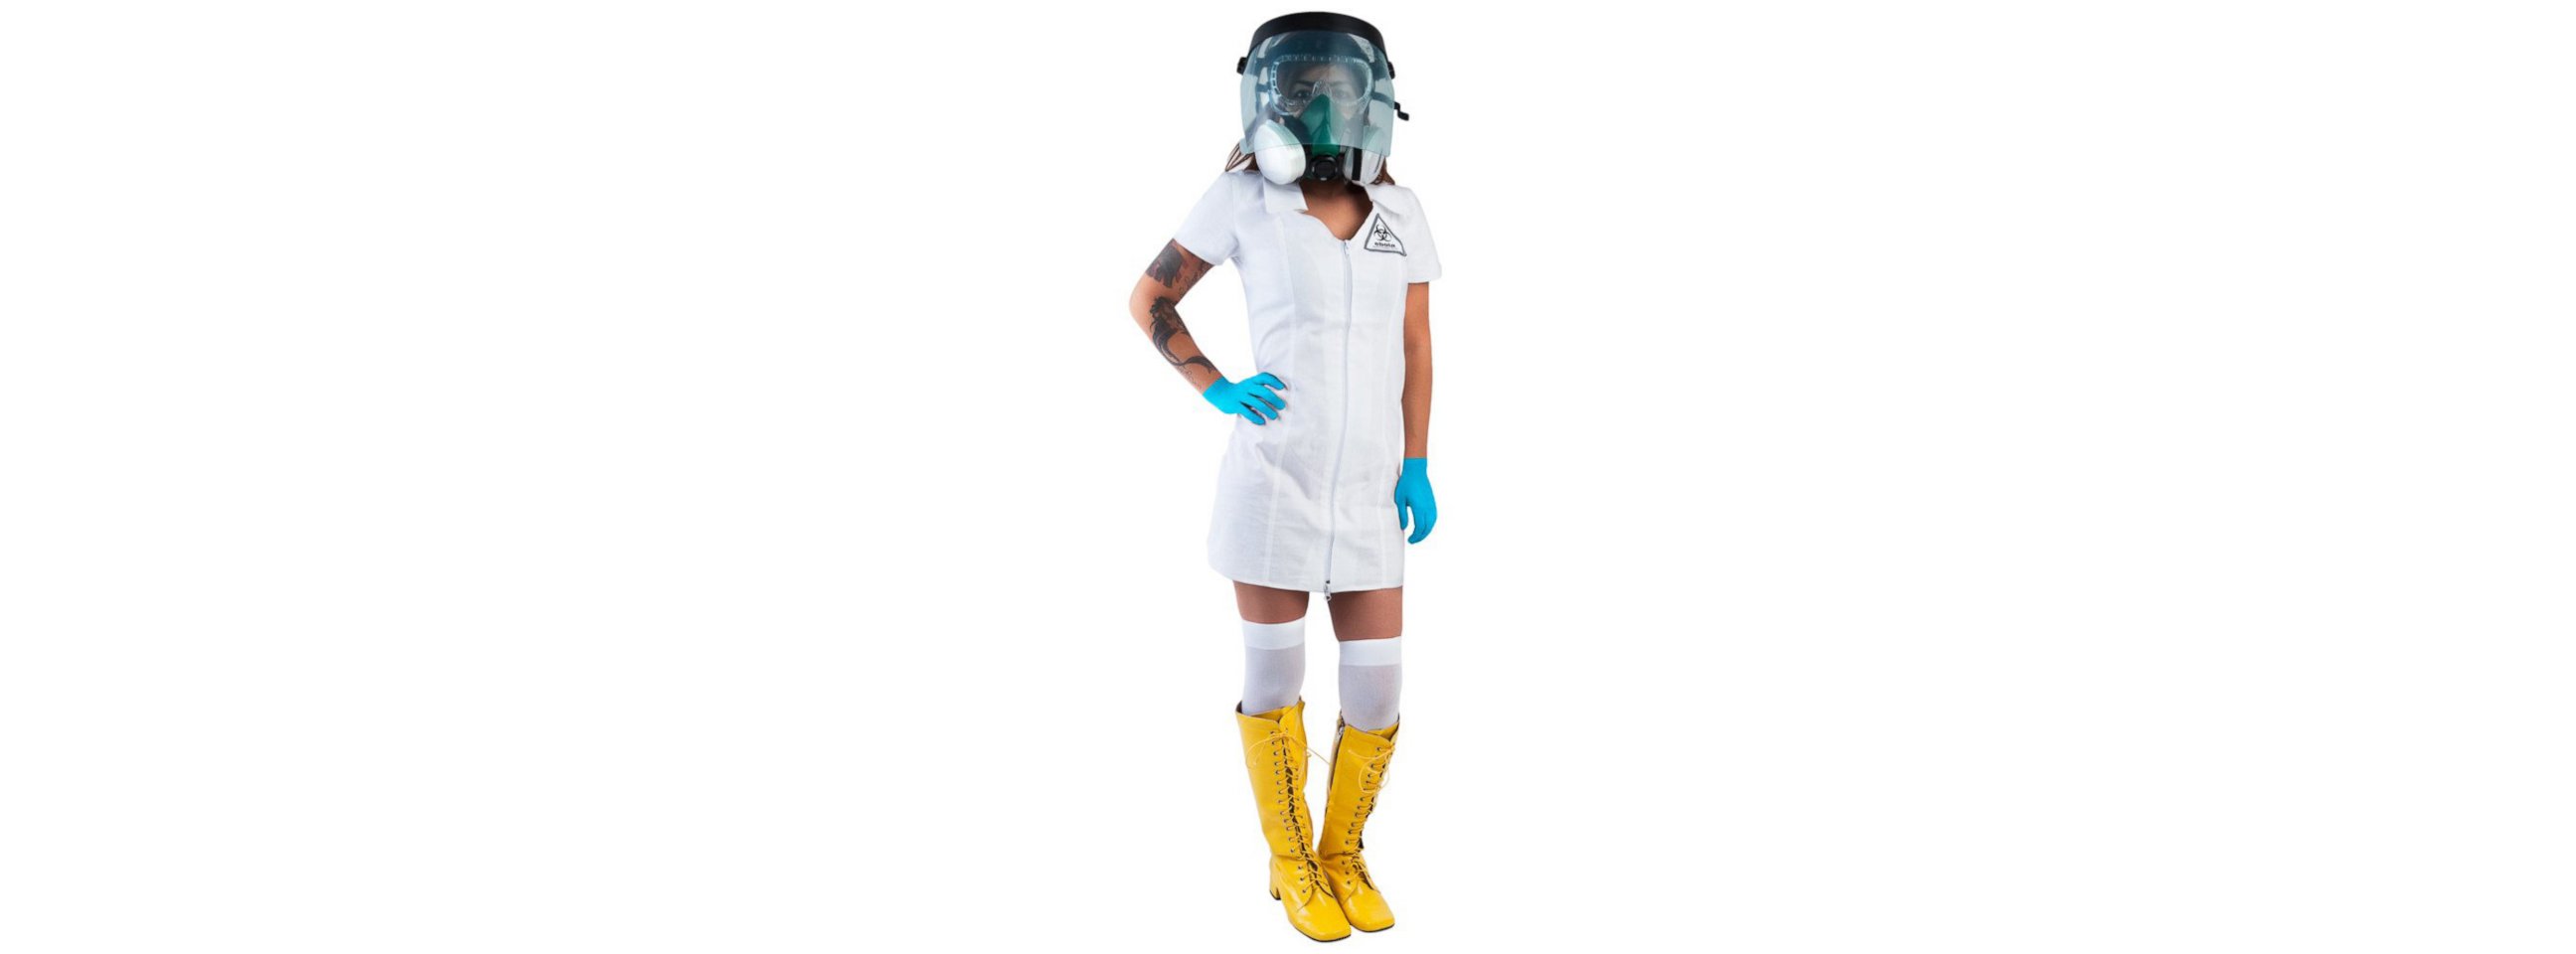 PHOTO: Costumeish's "Sexy Ebola" costume. 